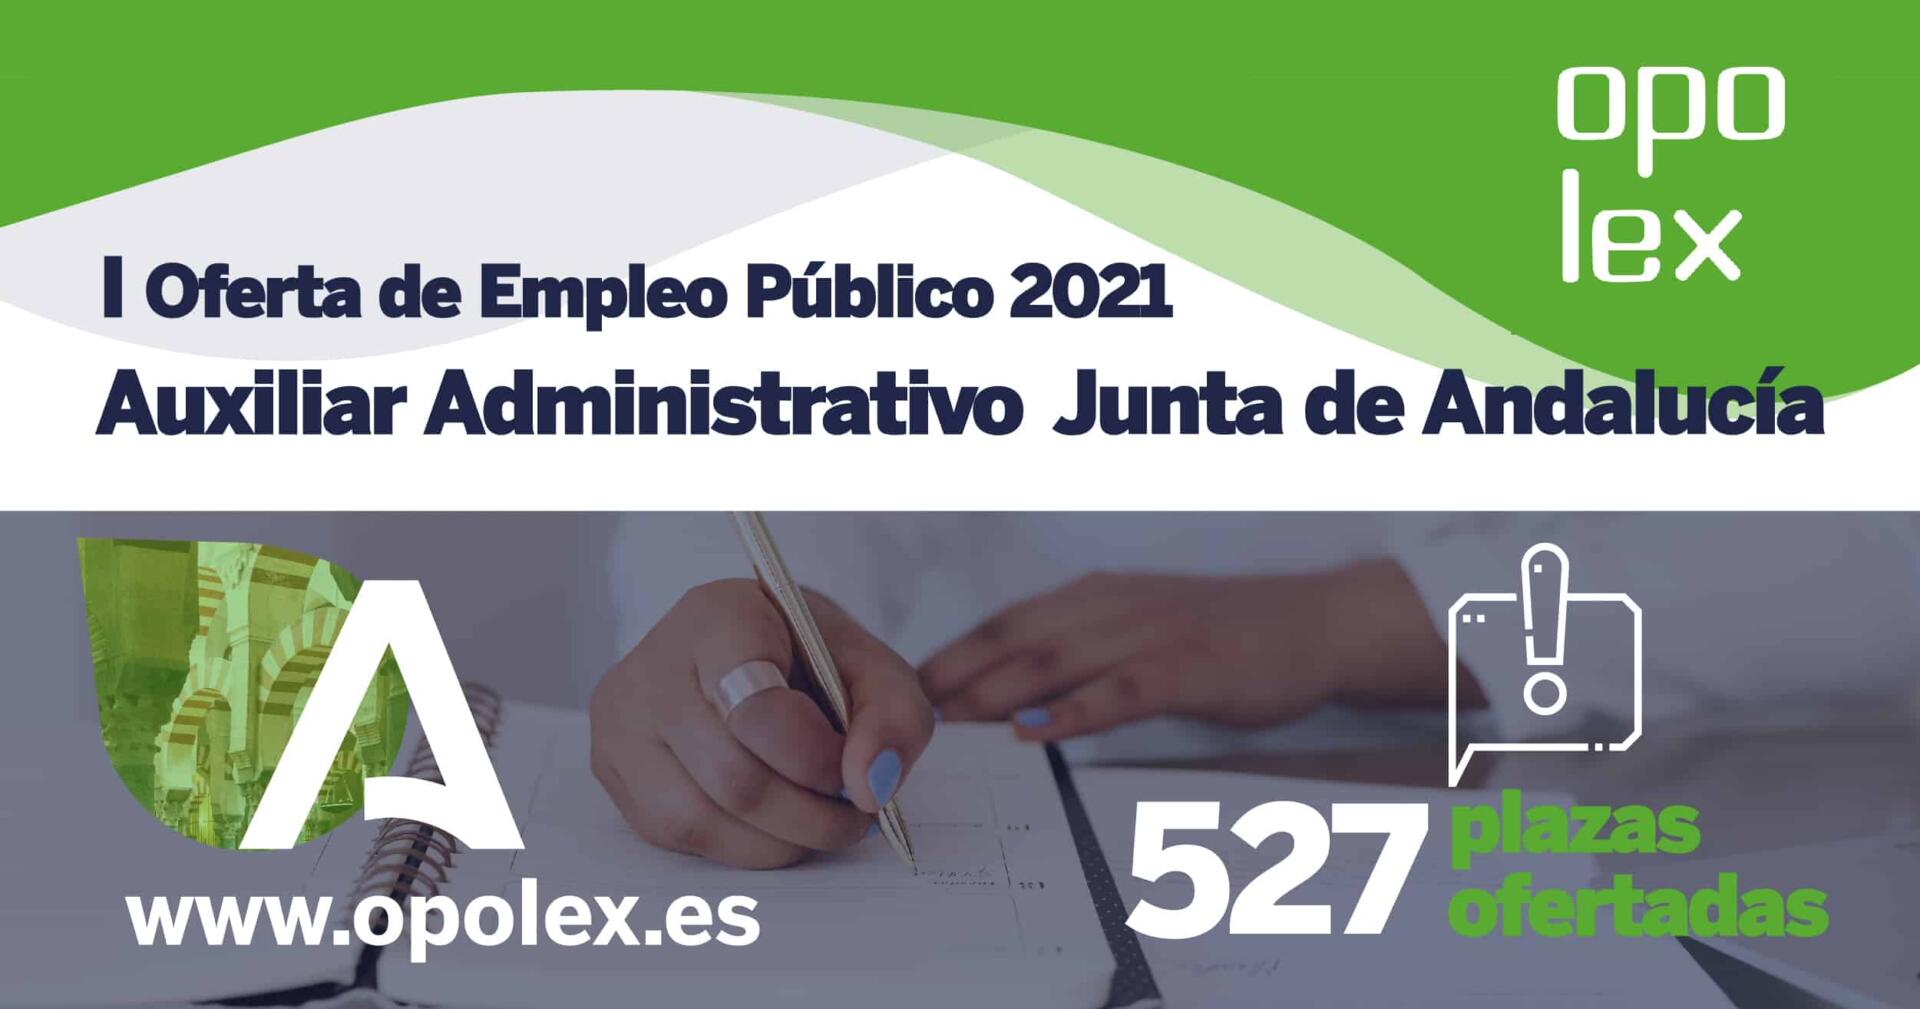 Oferta de Empleo Publico 2021 Auxiliar Administrativo Junta Andalucia